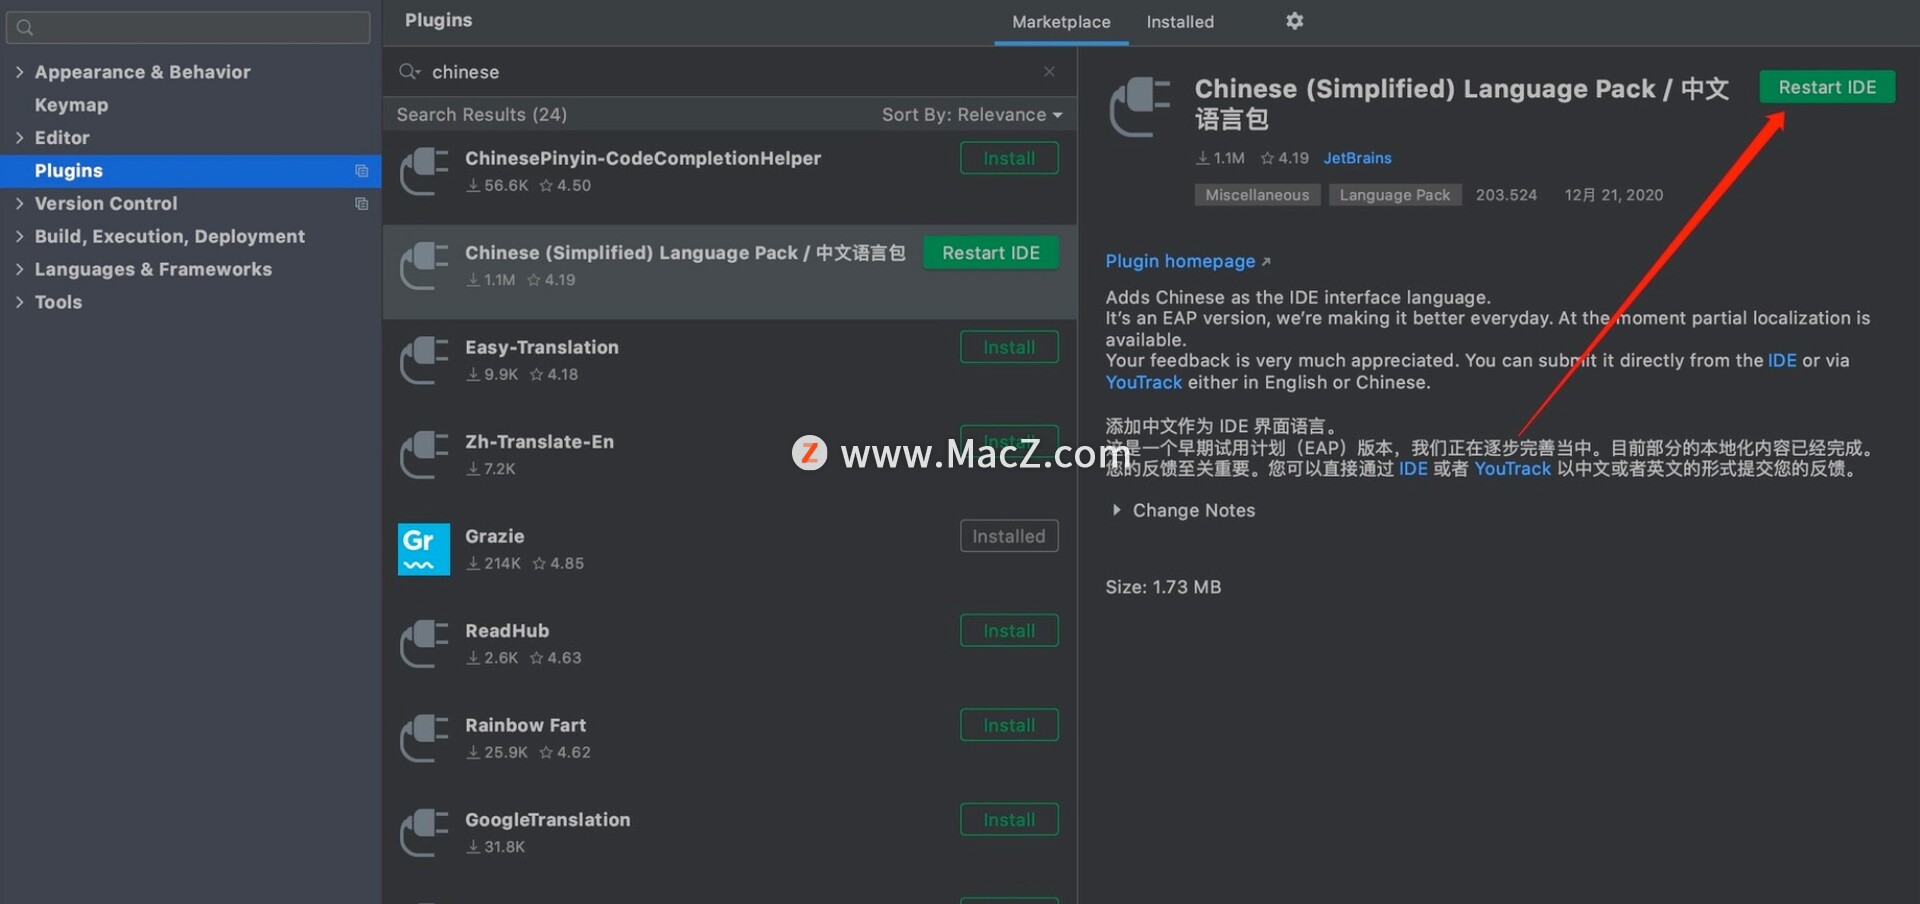 WebStorm激活2023.3.6(WebStorm for Mac(JavaScript开发工具) v2023.3.2中文特别版)